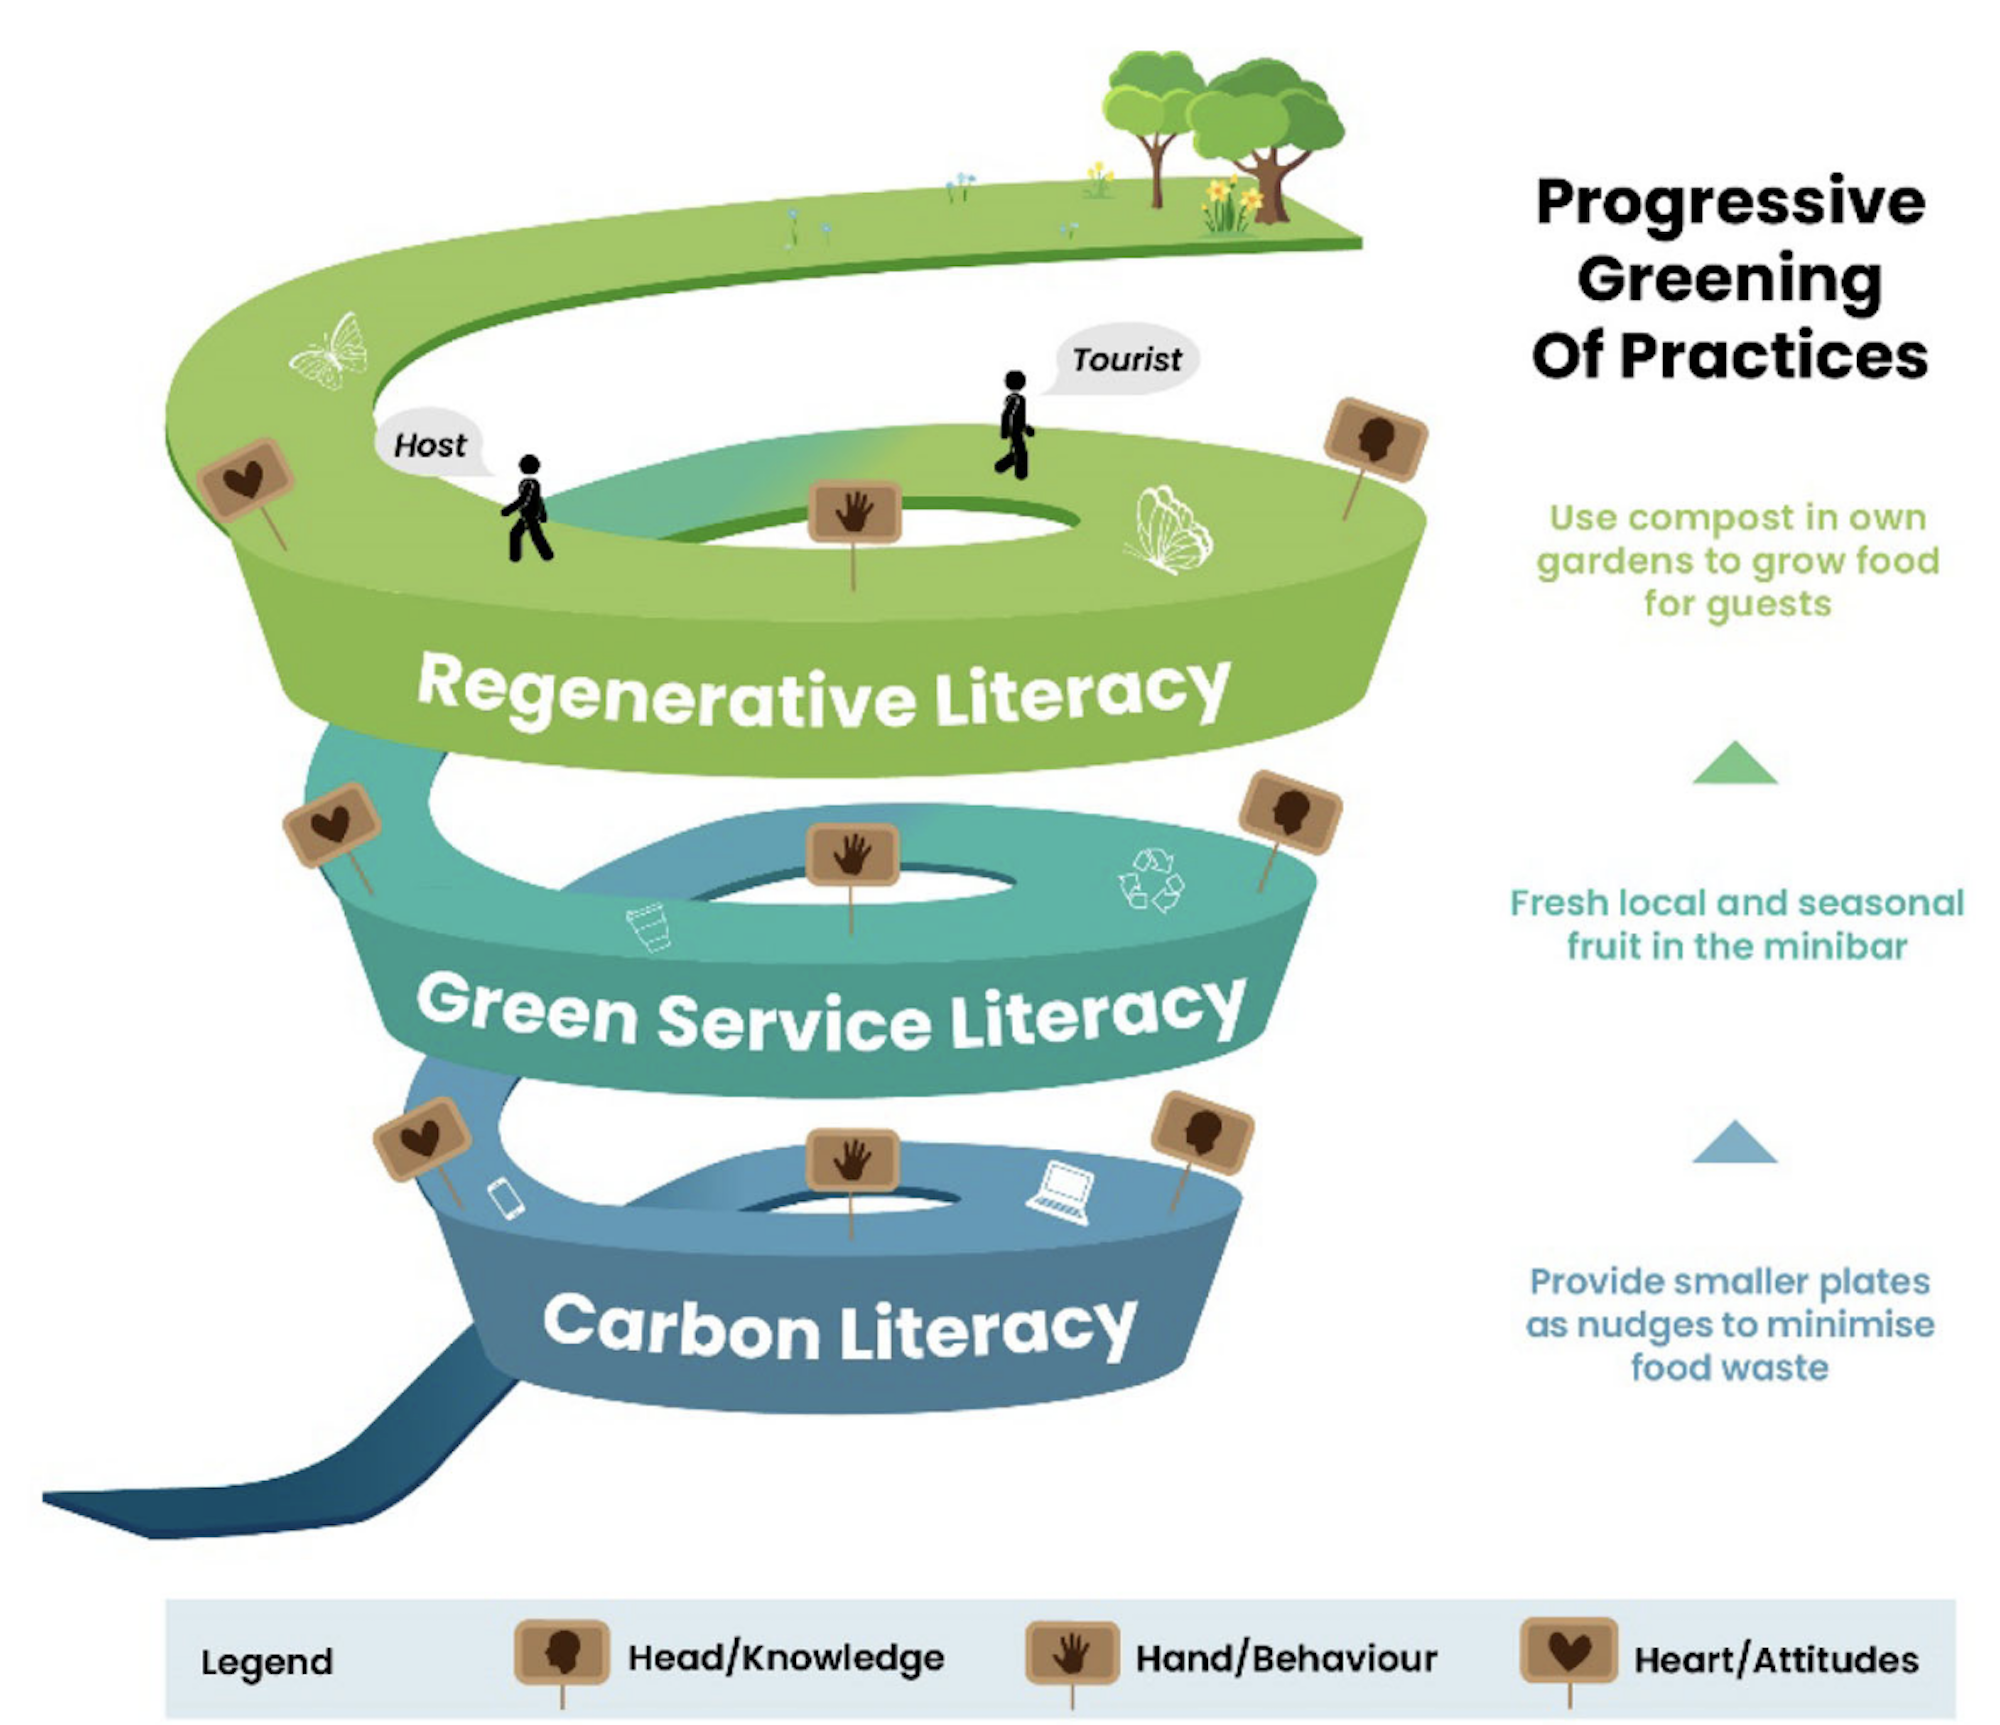 Progressive Greening of Practices